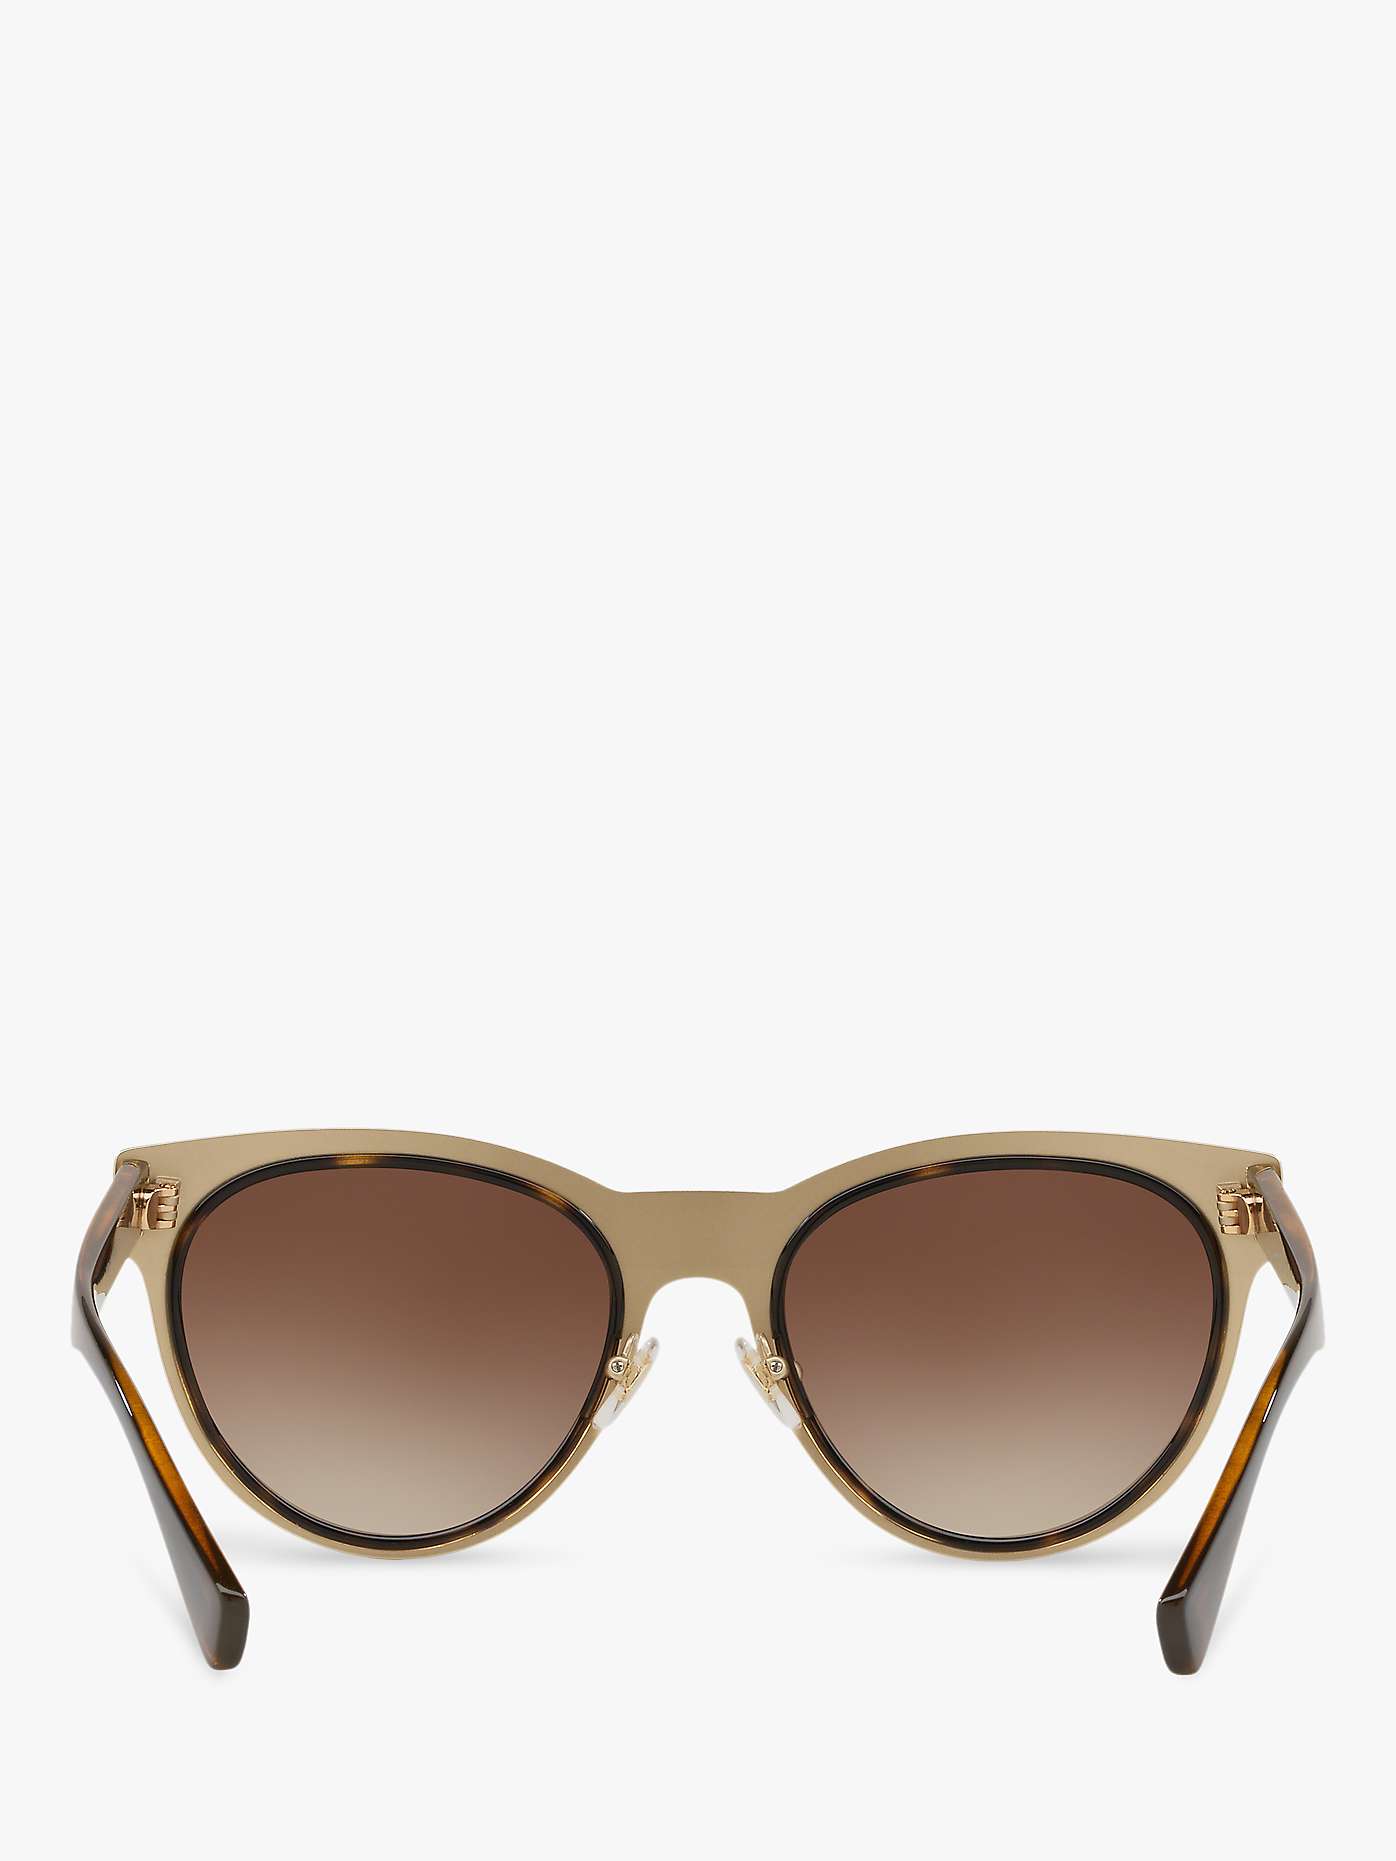 Buy Versace VE2198 Women's Oval Sunglasses Online at johnlewis.com